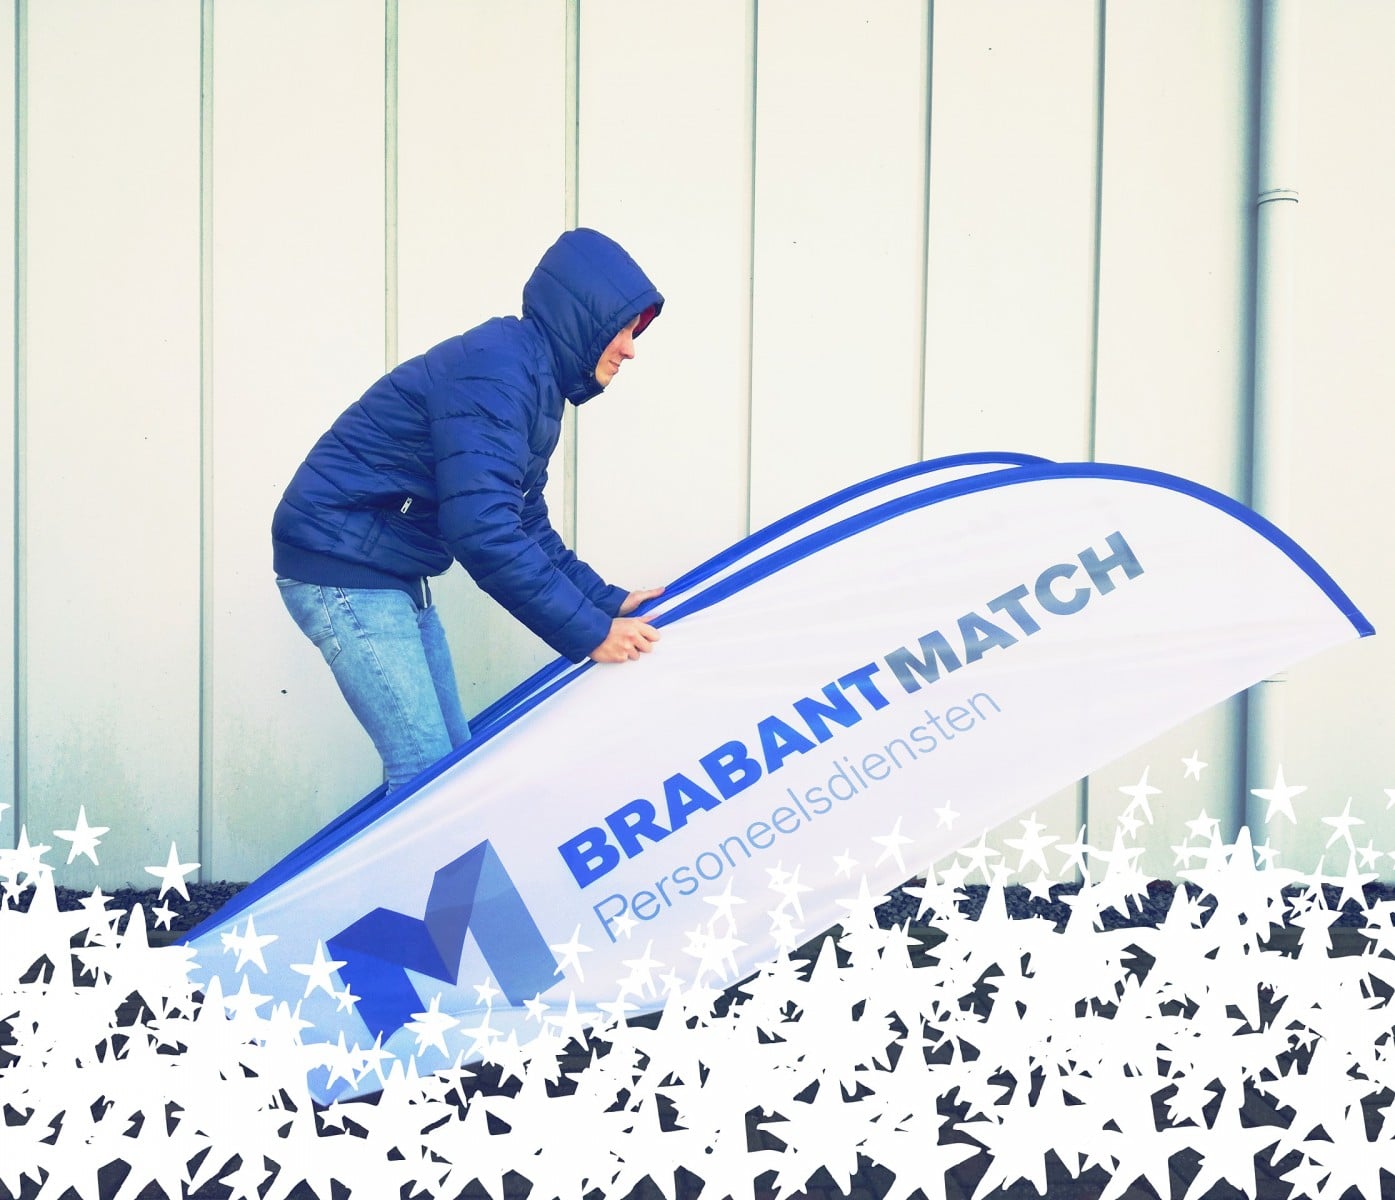 Game, Set, Match! ~ Brabantse Winterspelen